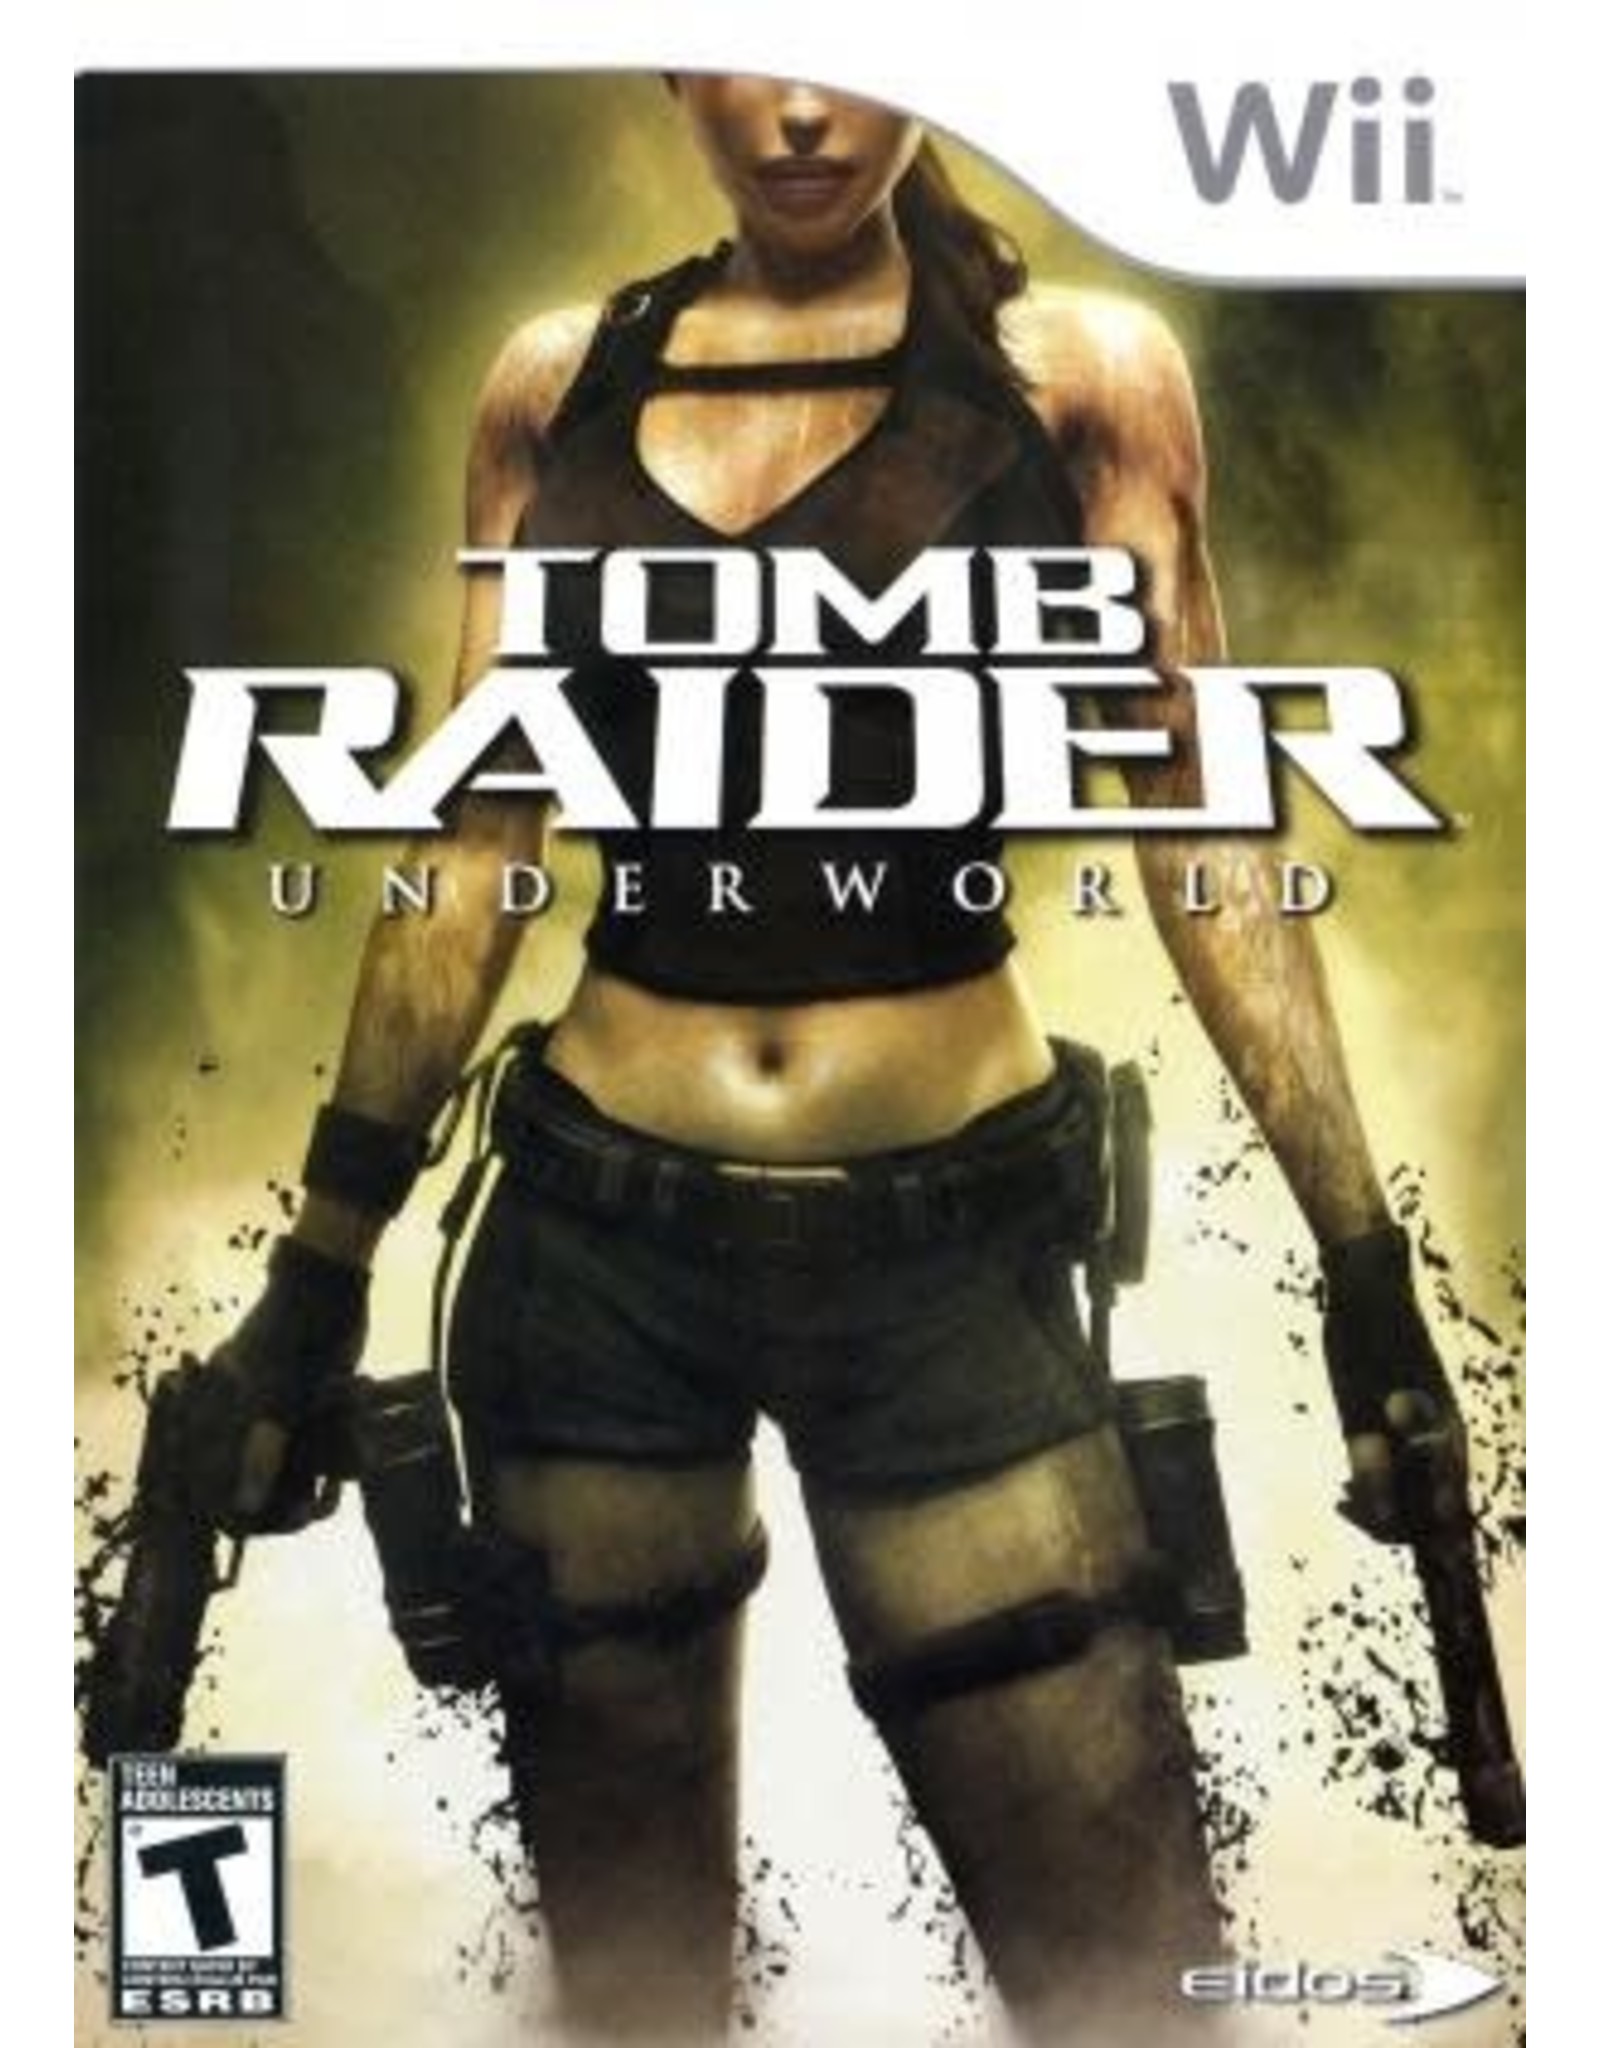 Wii Tomb Raider Underworld (CiB)